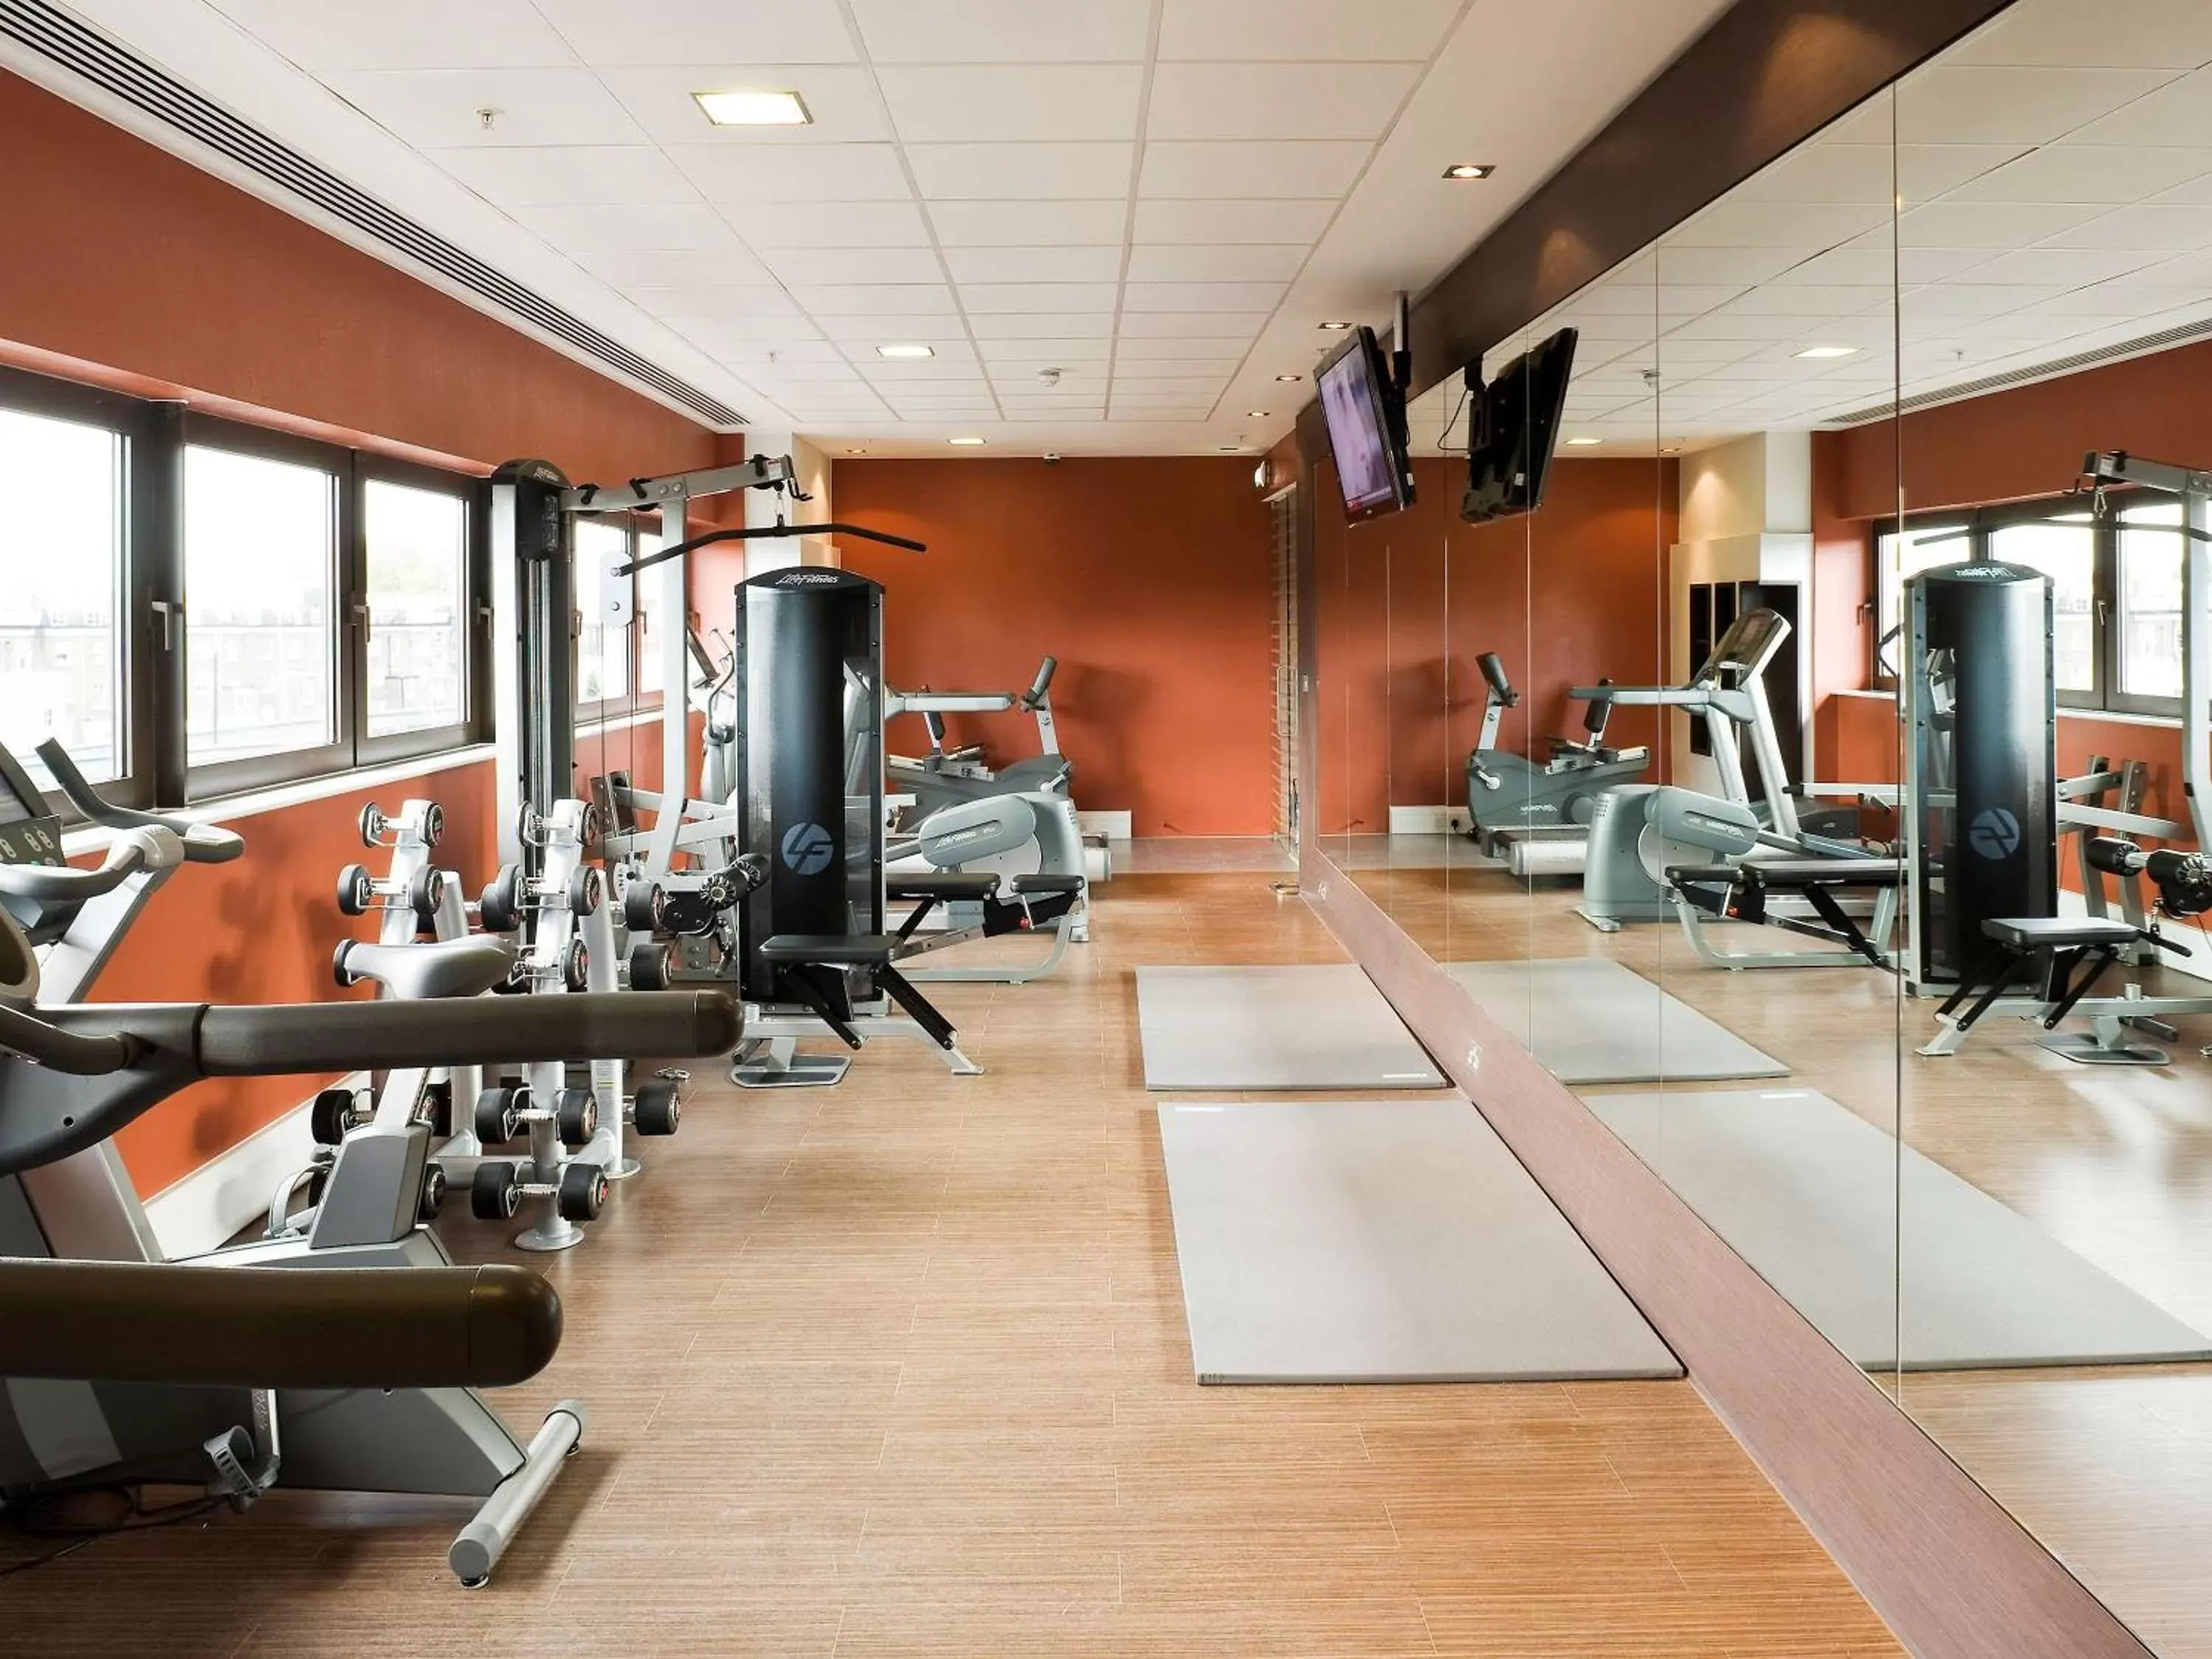 Fitness centre/facilities, Fitness Center/Facilities in Novotel London Paddington